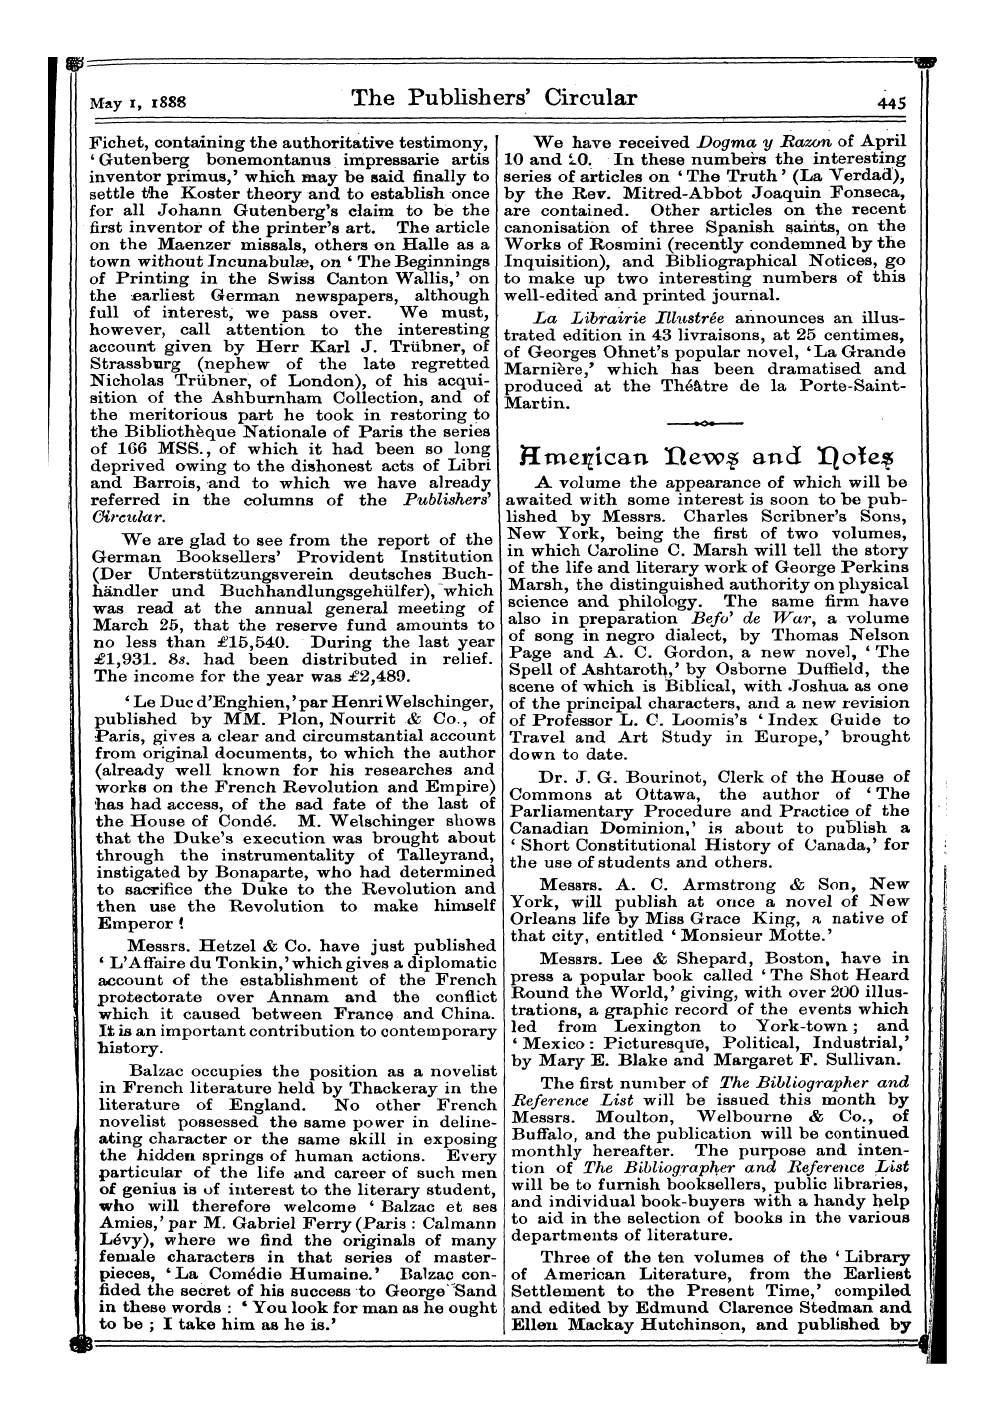 Publishers’ Circular (1880-1890): jS F Y, 1st edition - Htueijican Ilevp^ And Y\Ole$